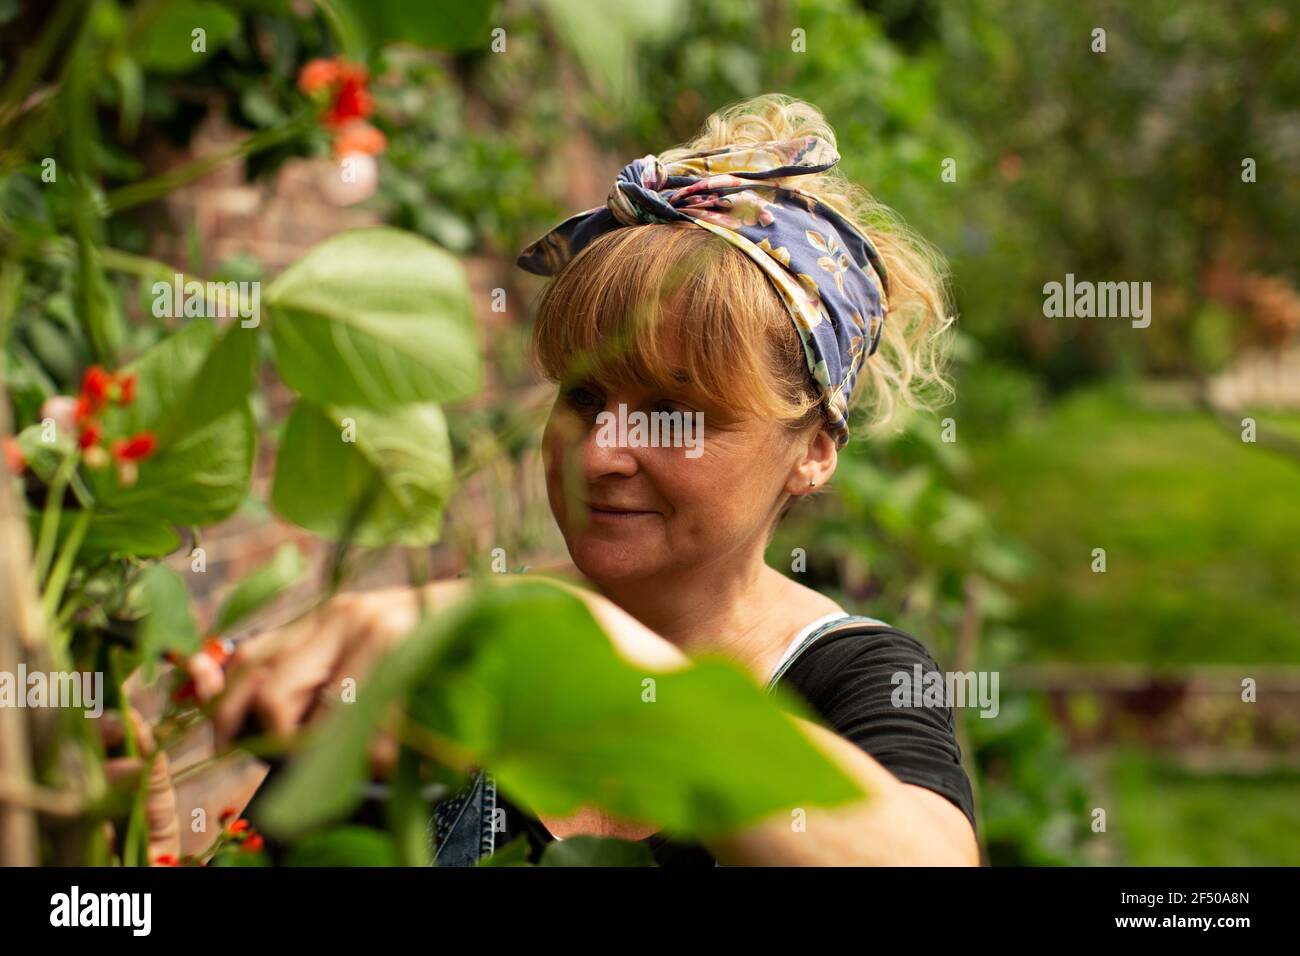 Woman tending to plants in garden Stock Photo